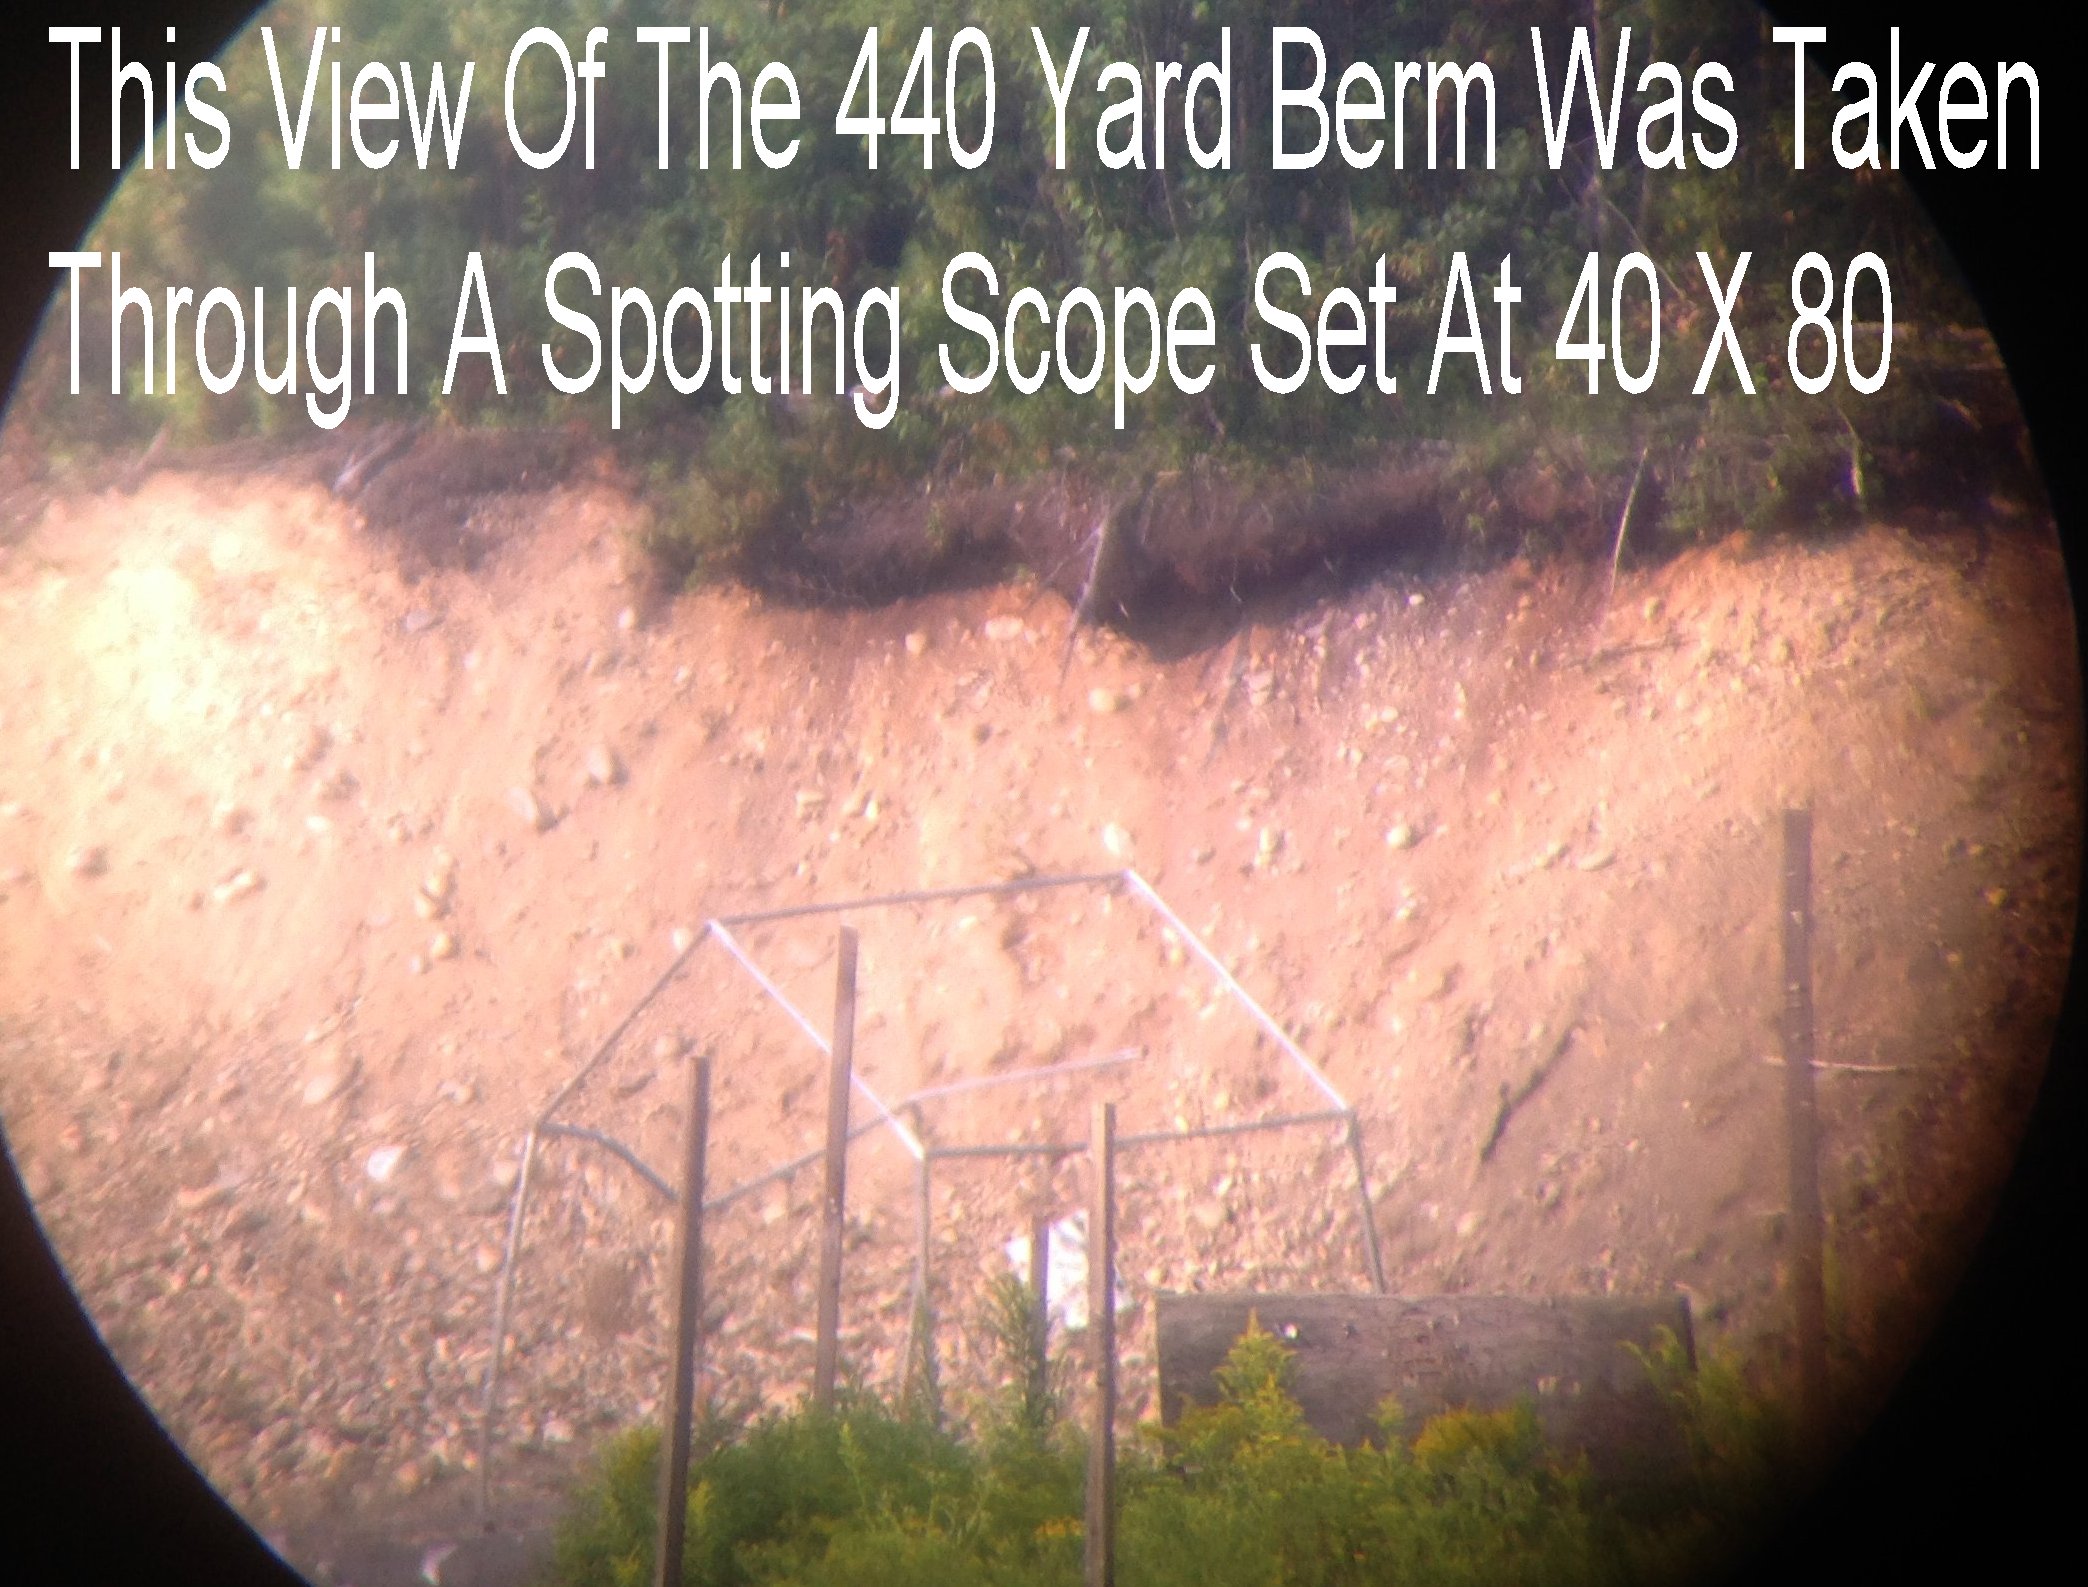 400 Yard Range from Shooter's Bench Looking Down Range Through Scope set at 40 x 80